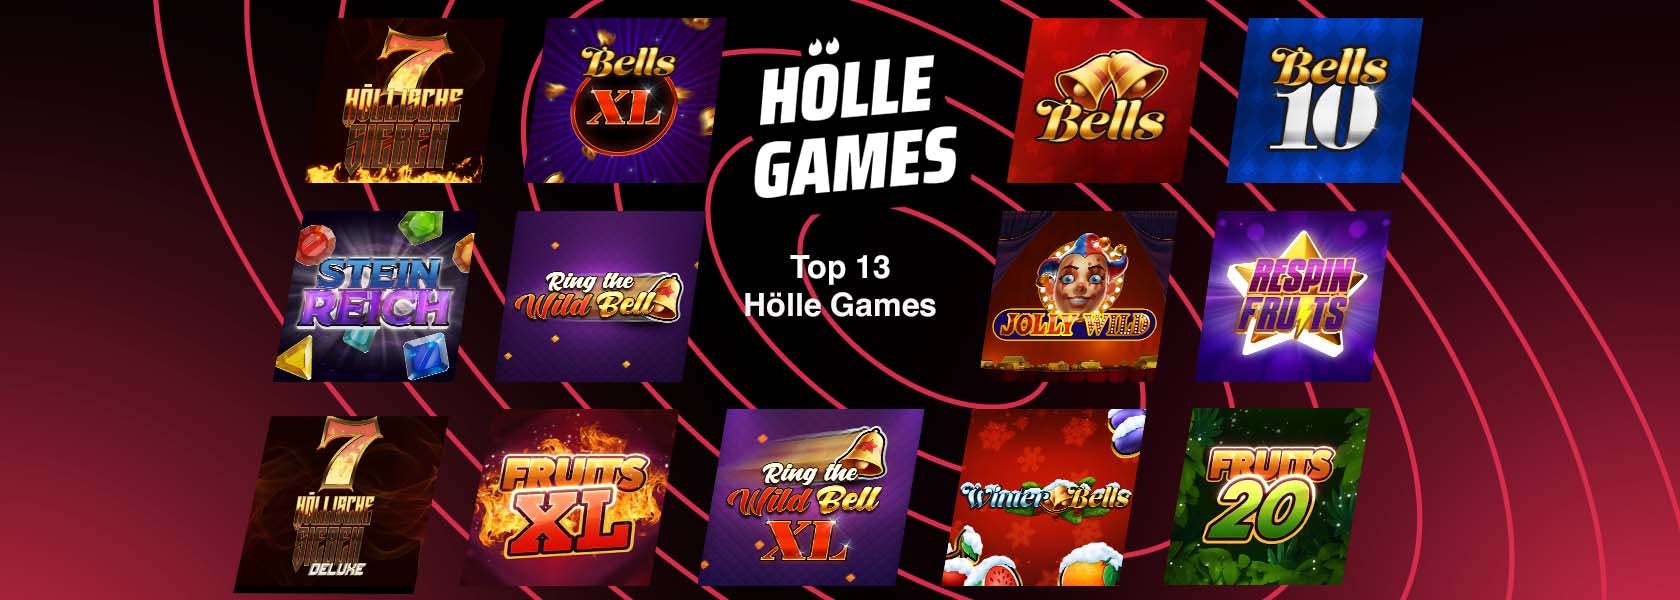 hoelle-games-top13-1680x600